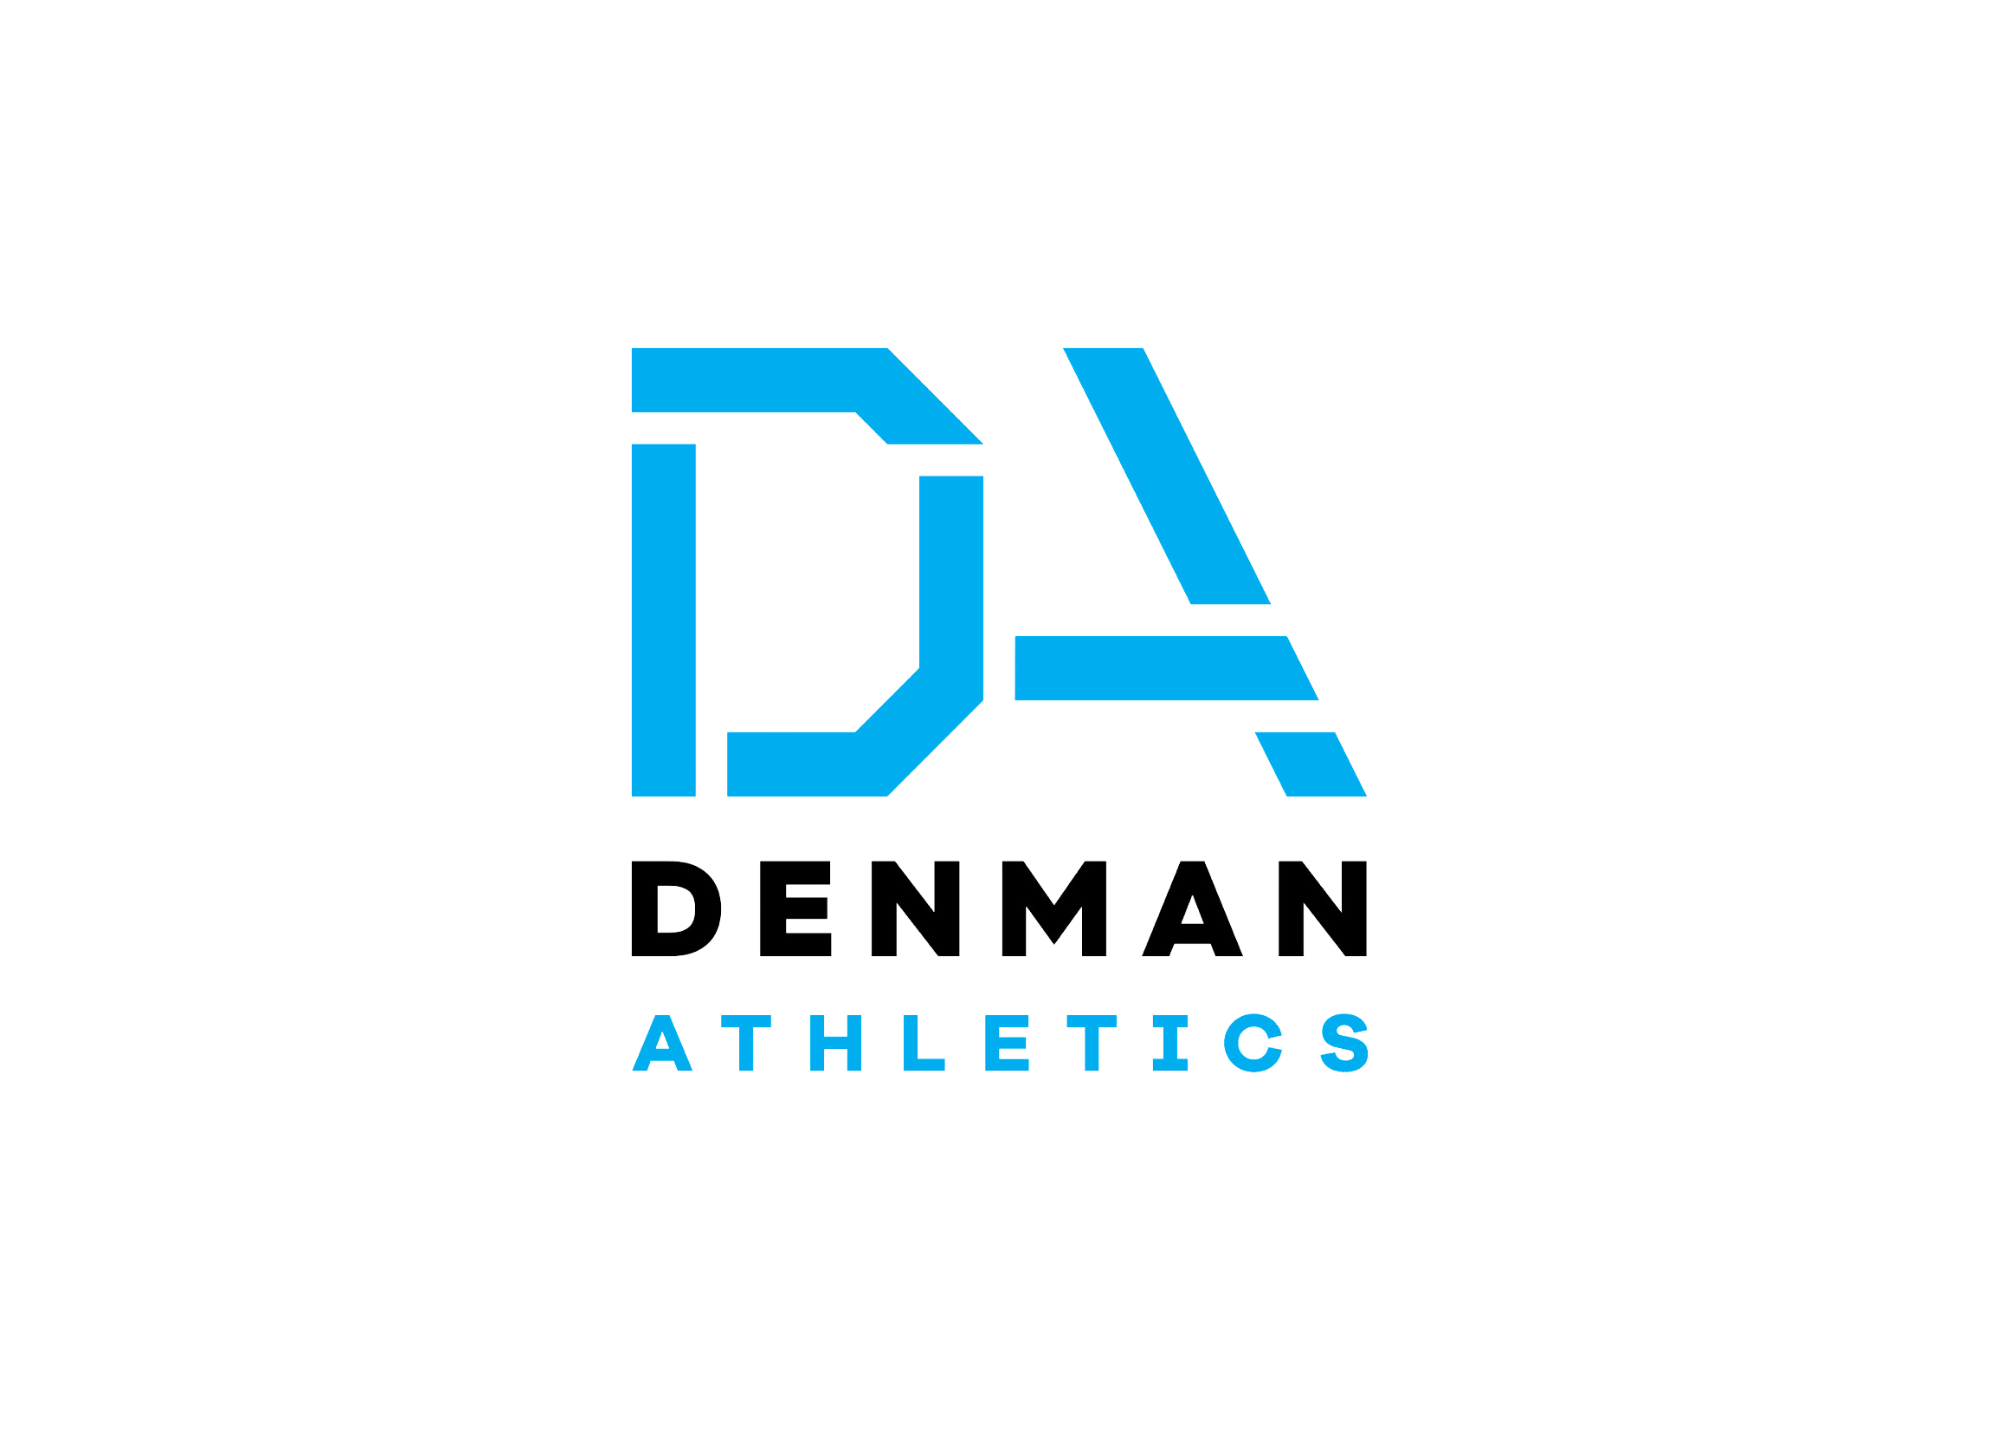 Denman athletics logo